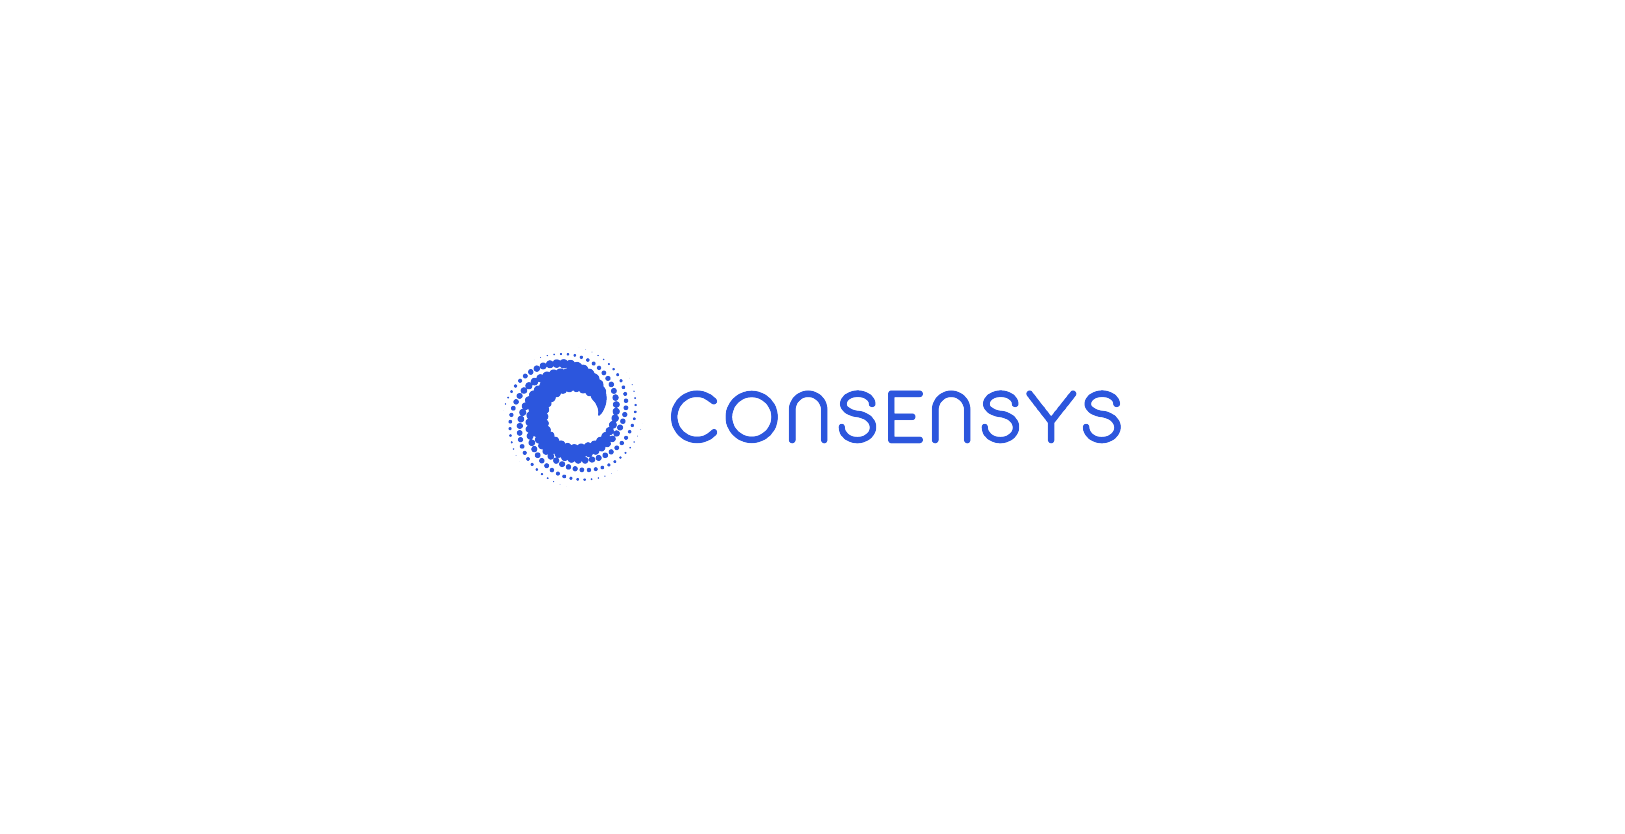 Vision Fund investment portfolio company ConsenSys's logo